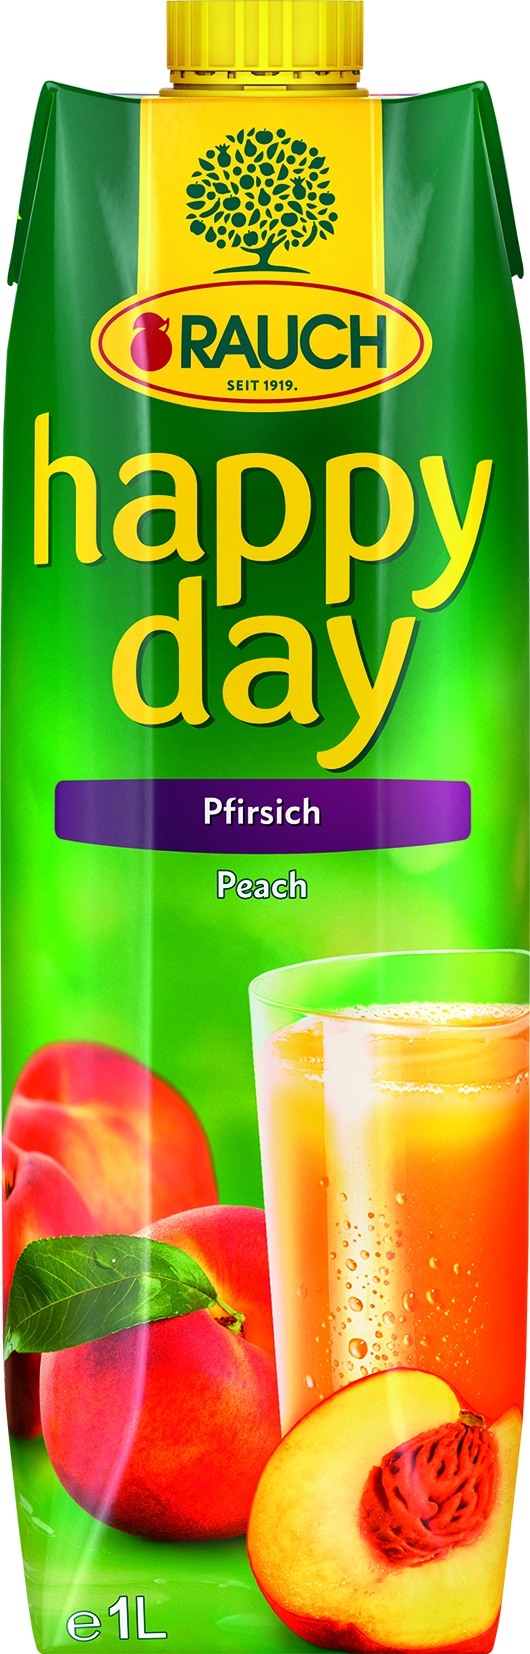 Happy Day Pfirsich   